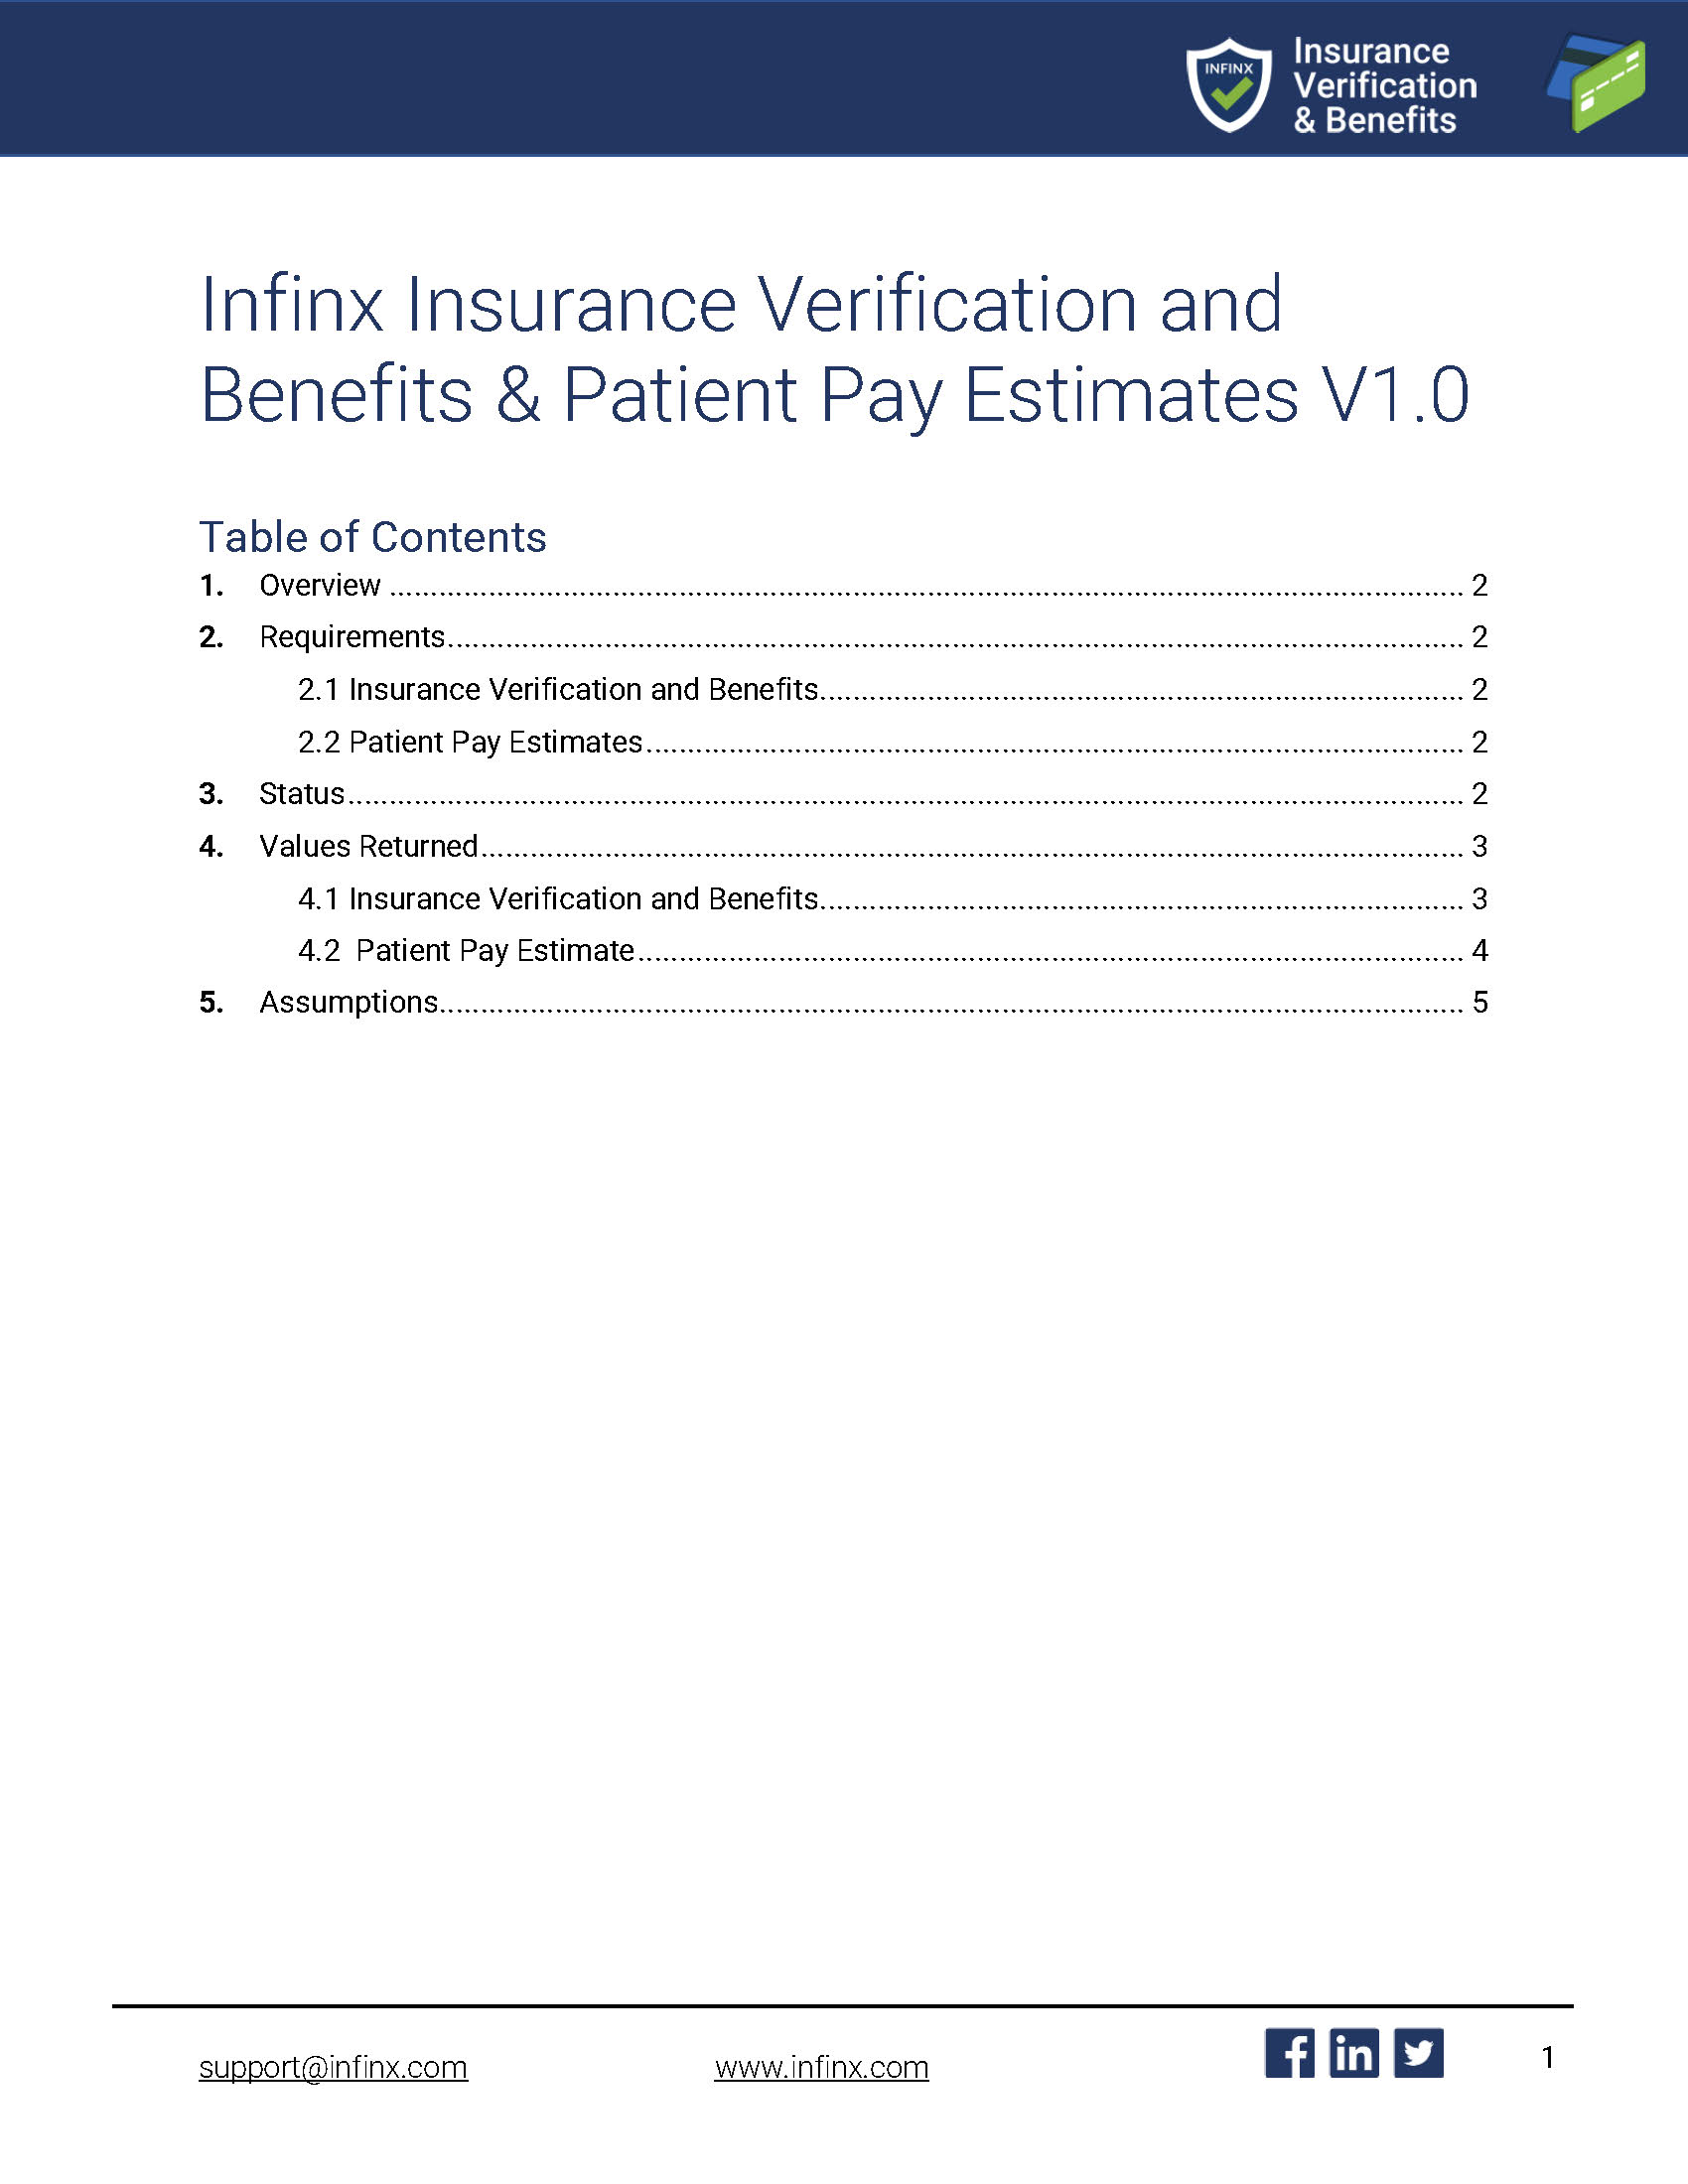 Infinx - Insurance Verification and Benefits & PPE - April 2021 1